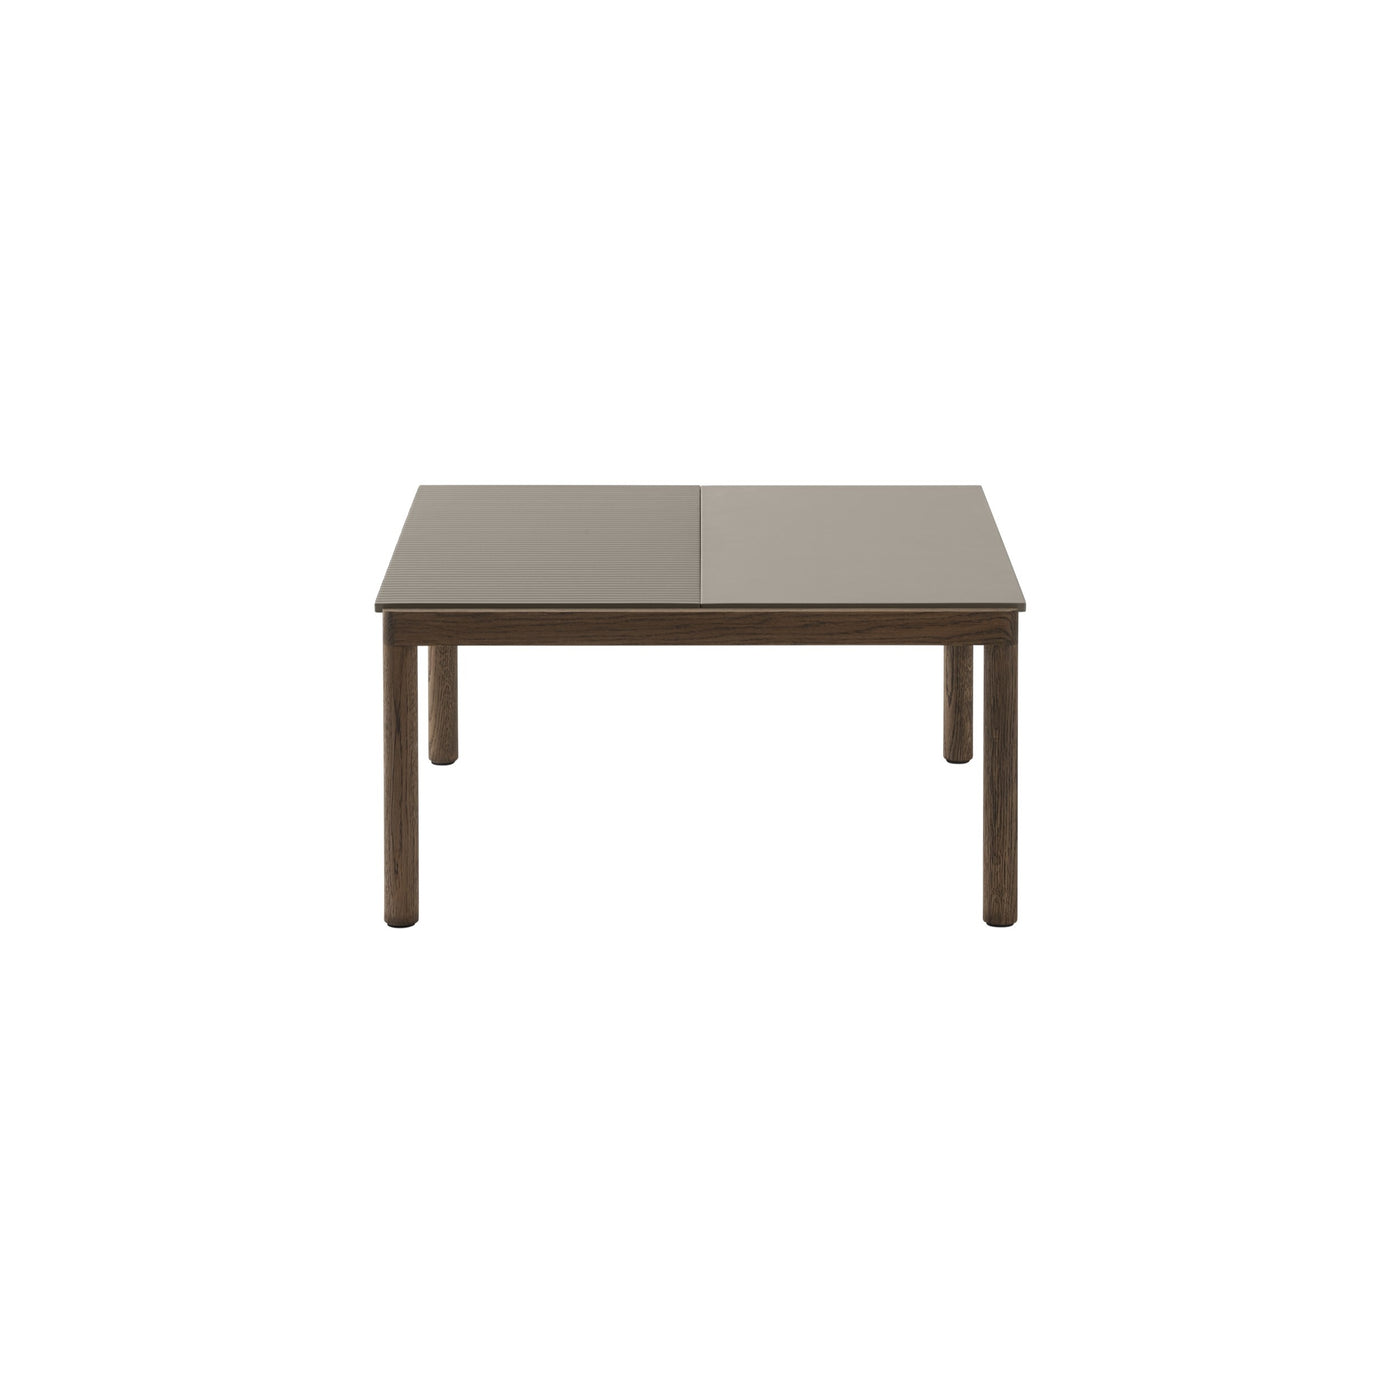 Muuto Couple Coffee Table 1 plain 1 wavy tiles, taupe with dark oiled oak base. #style_1-plain-1-wavy